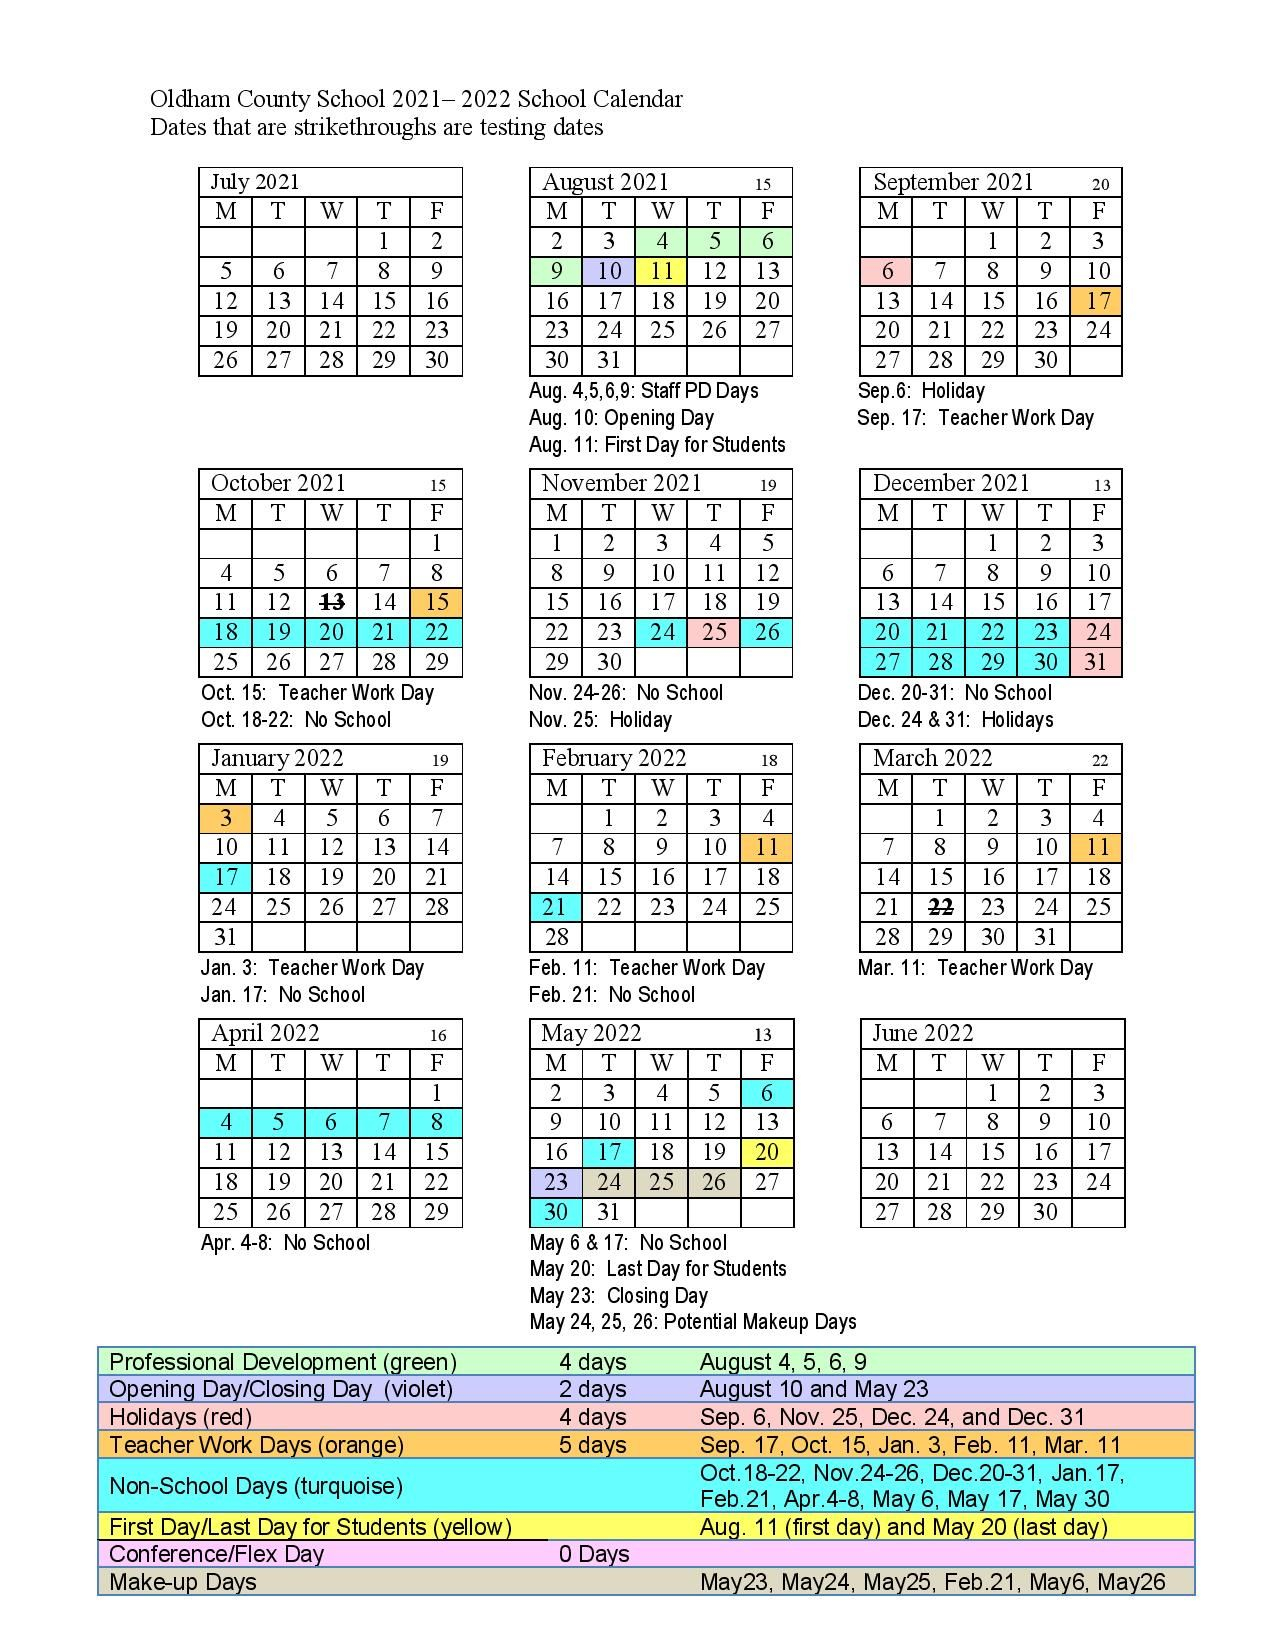 Oldham County Schools Calendar 2021-2022 In Pdf